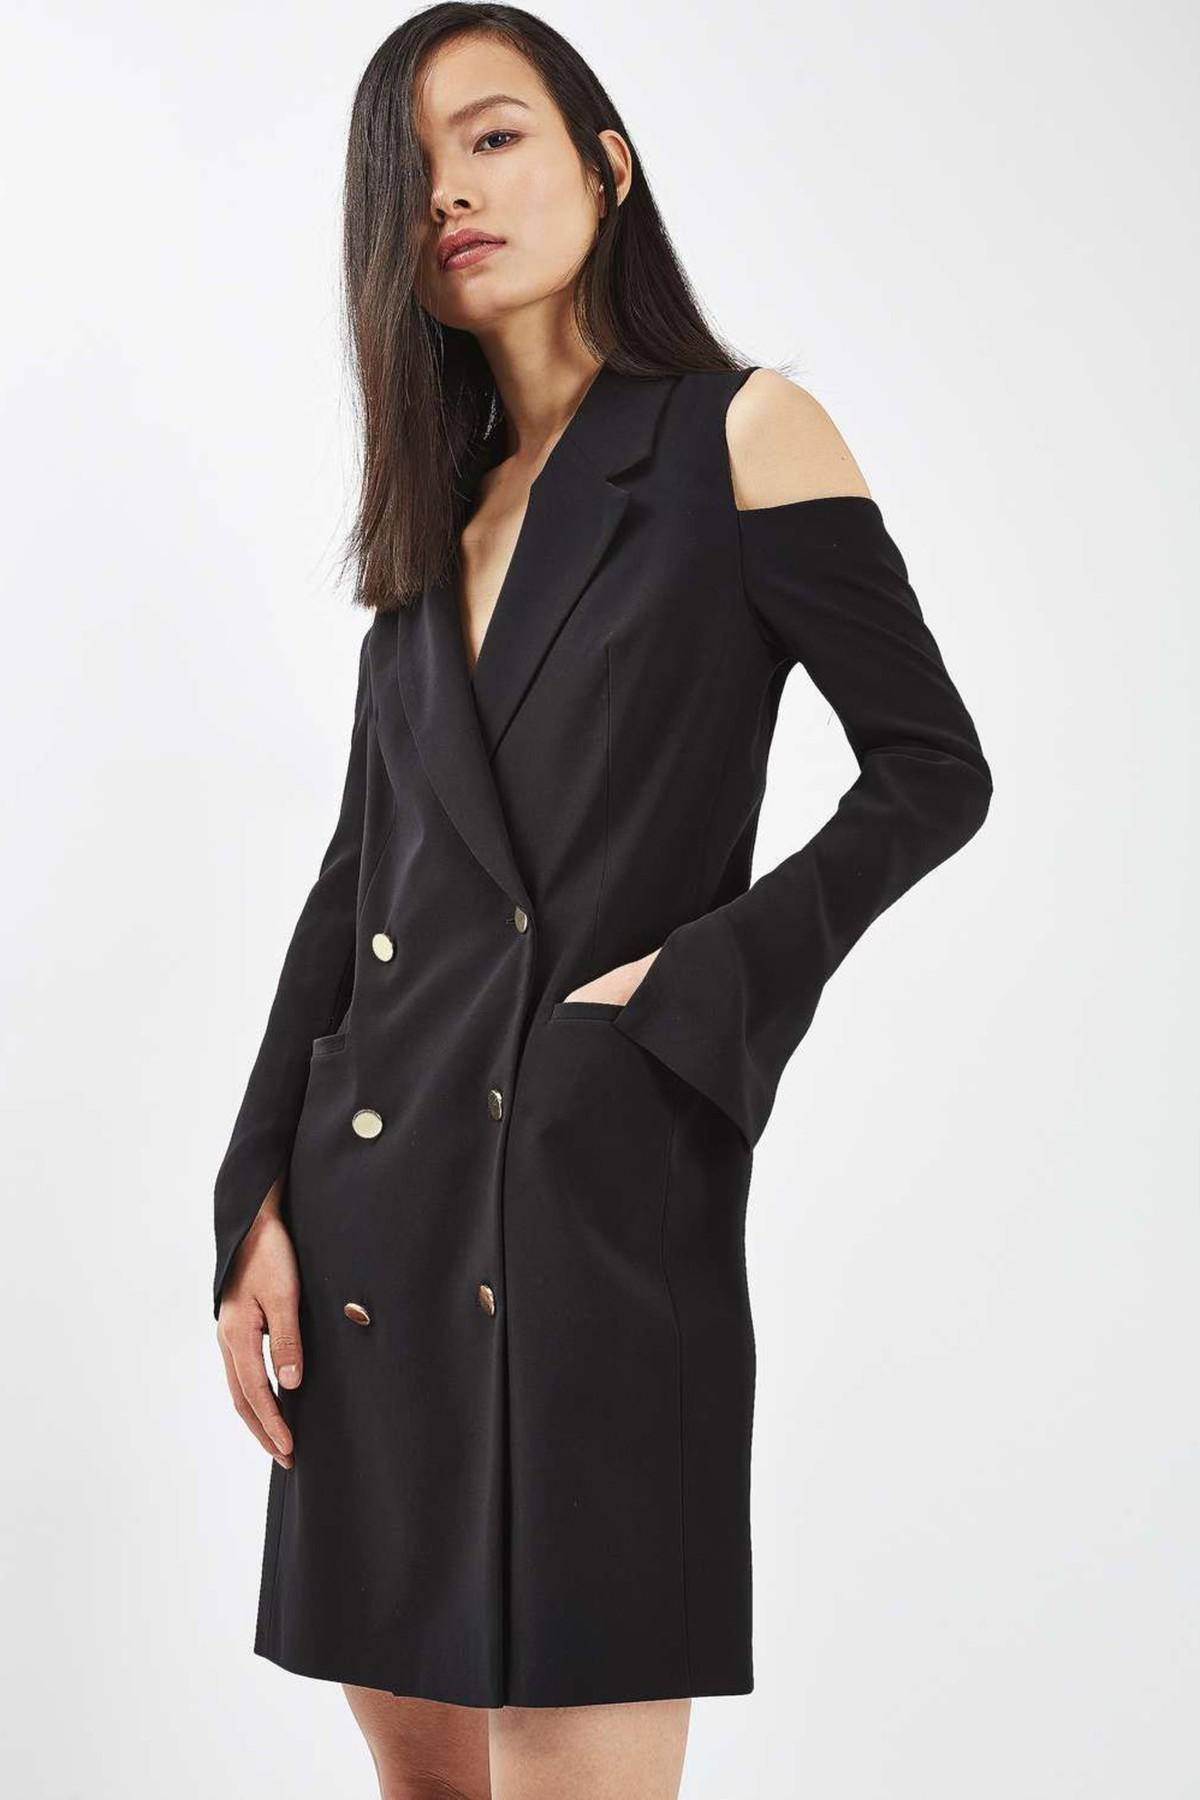 TOPSHOP Synthetic Cold Shoulder Blazer Dress in Black | Lyst